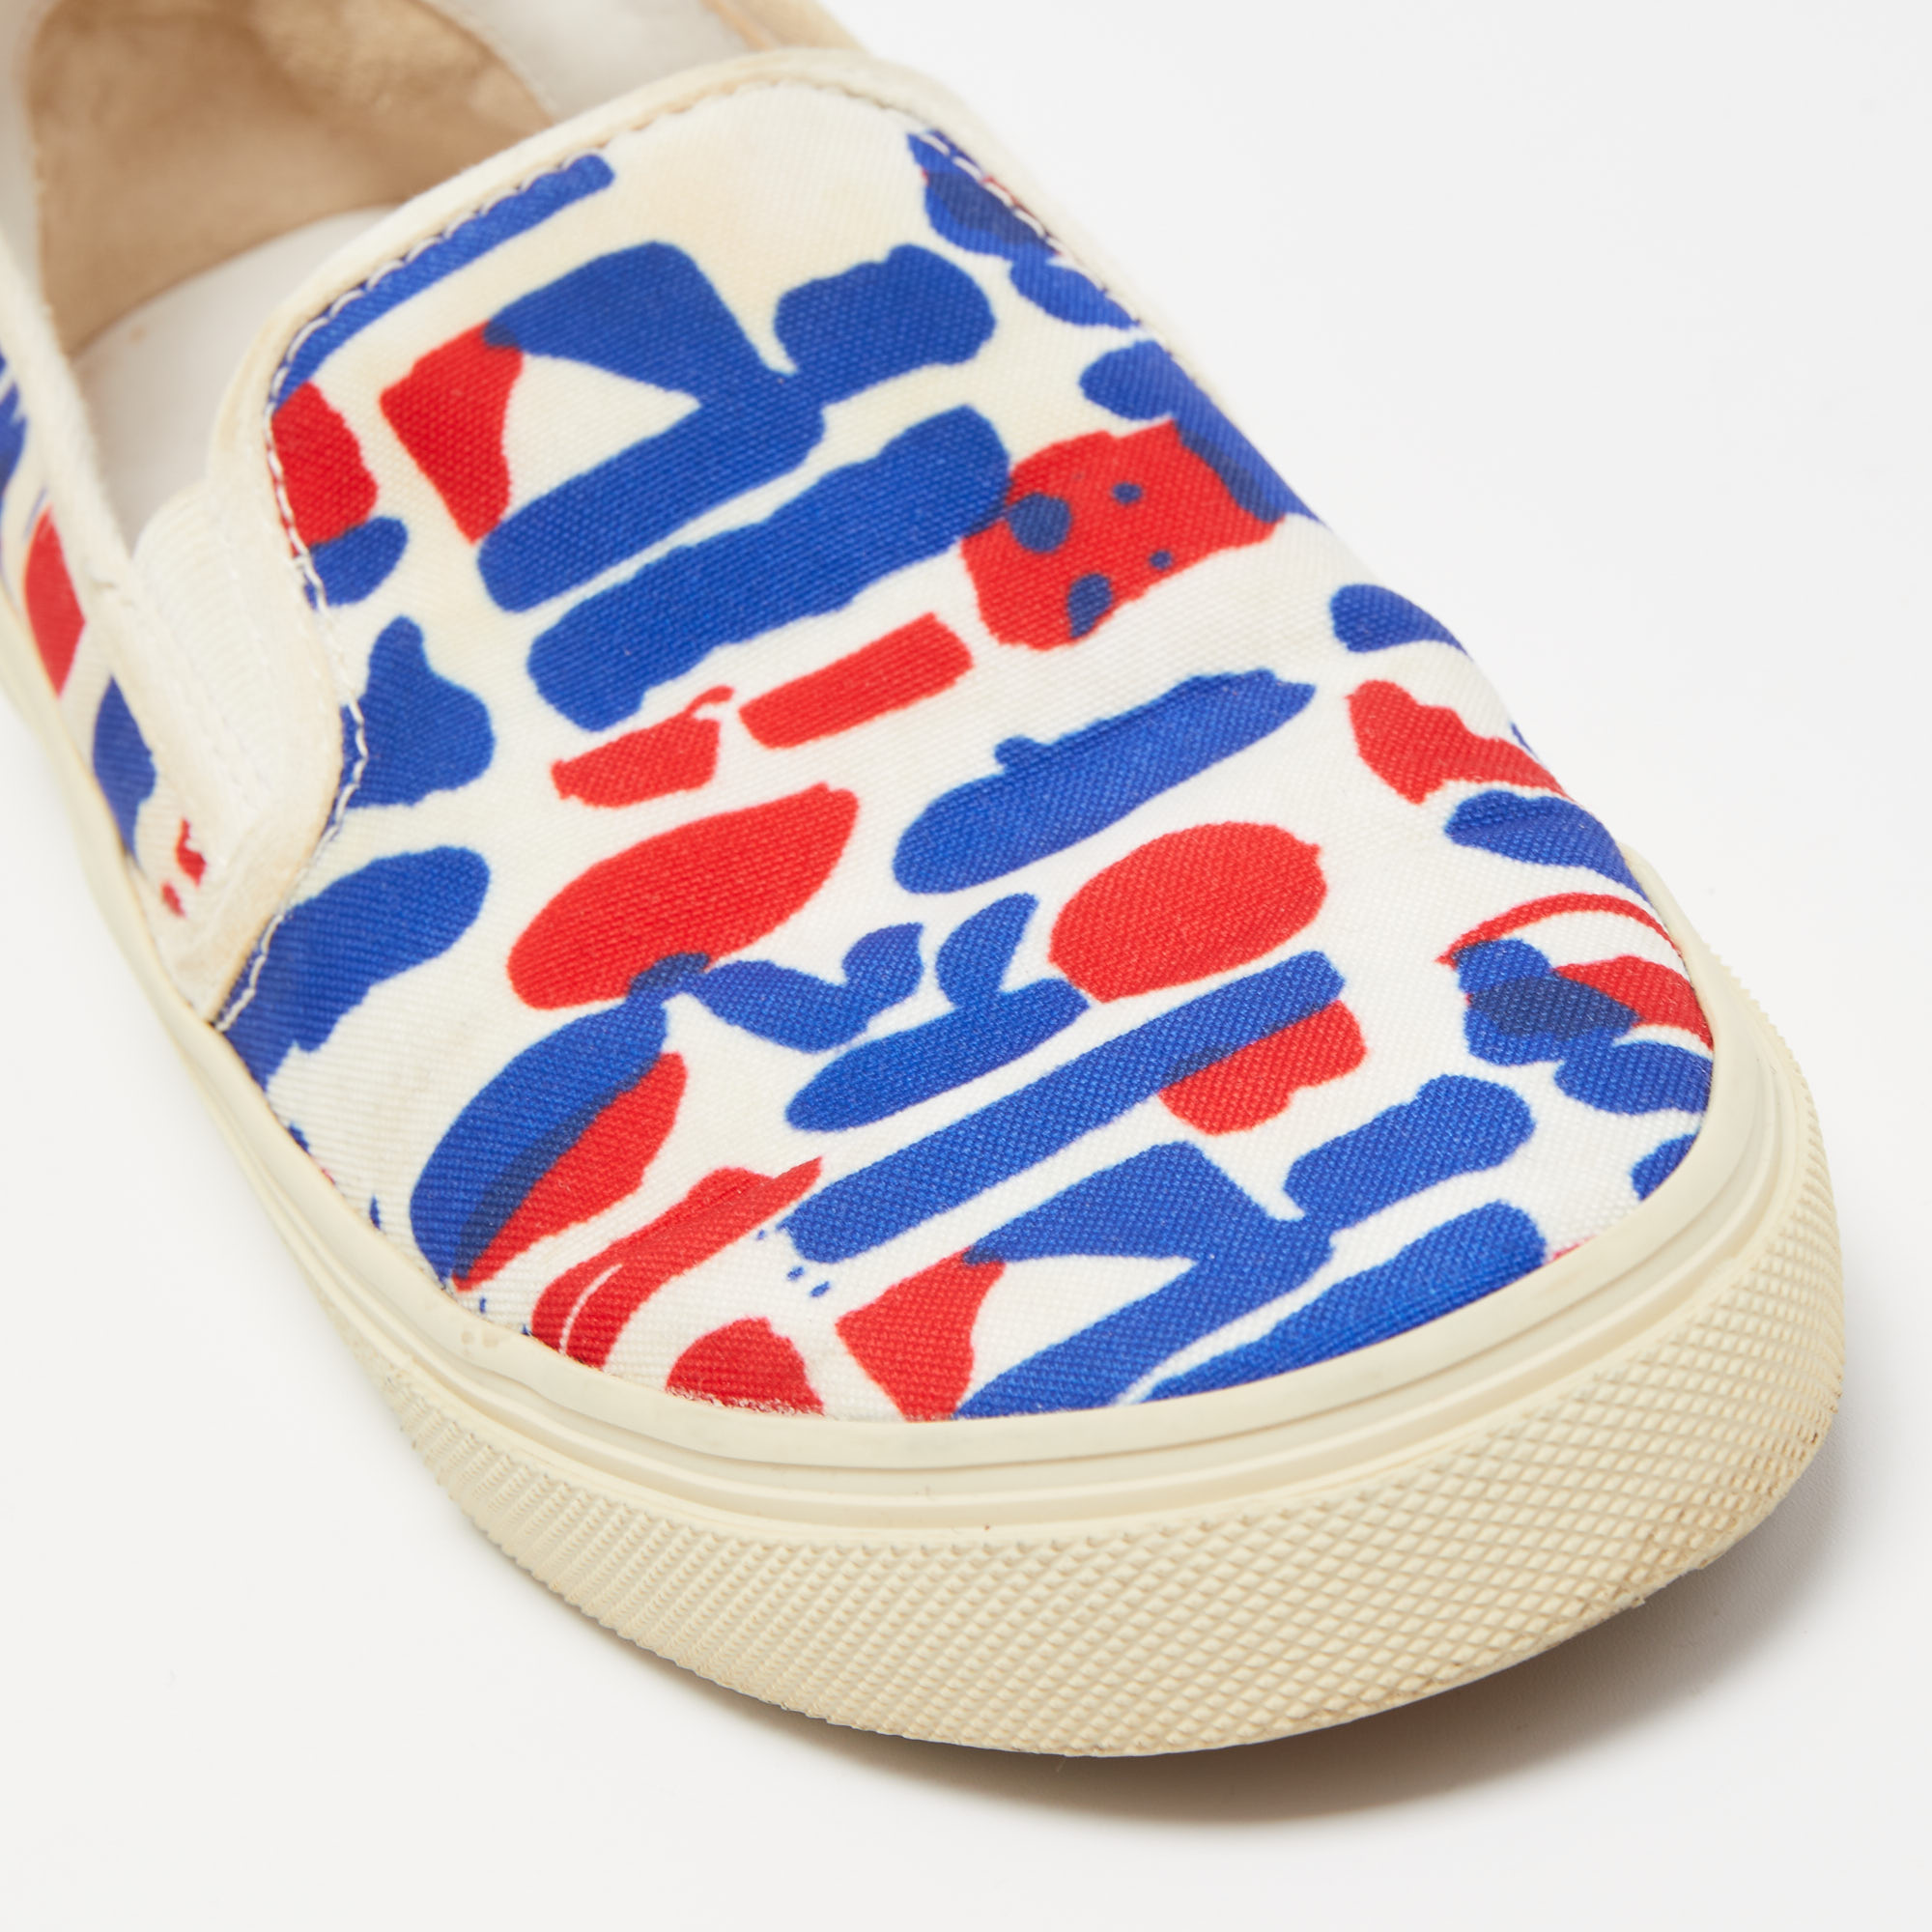 Saint Laurent Tricolor Printed Canvas Slip On Sneakers Size 37